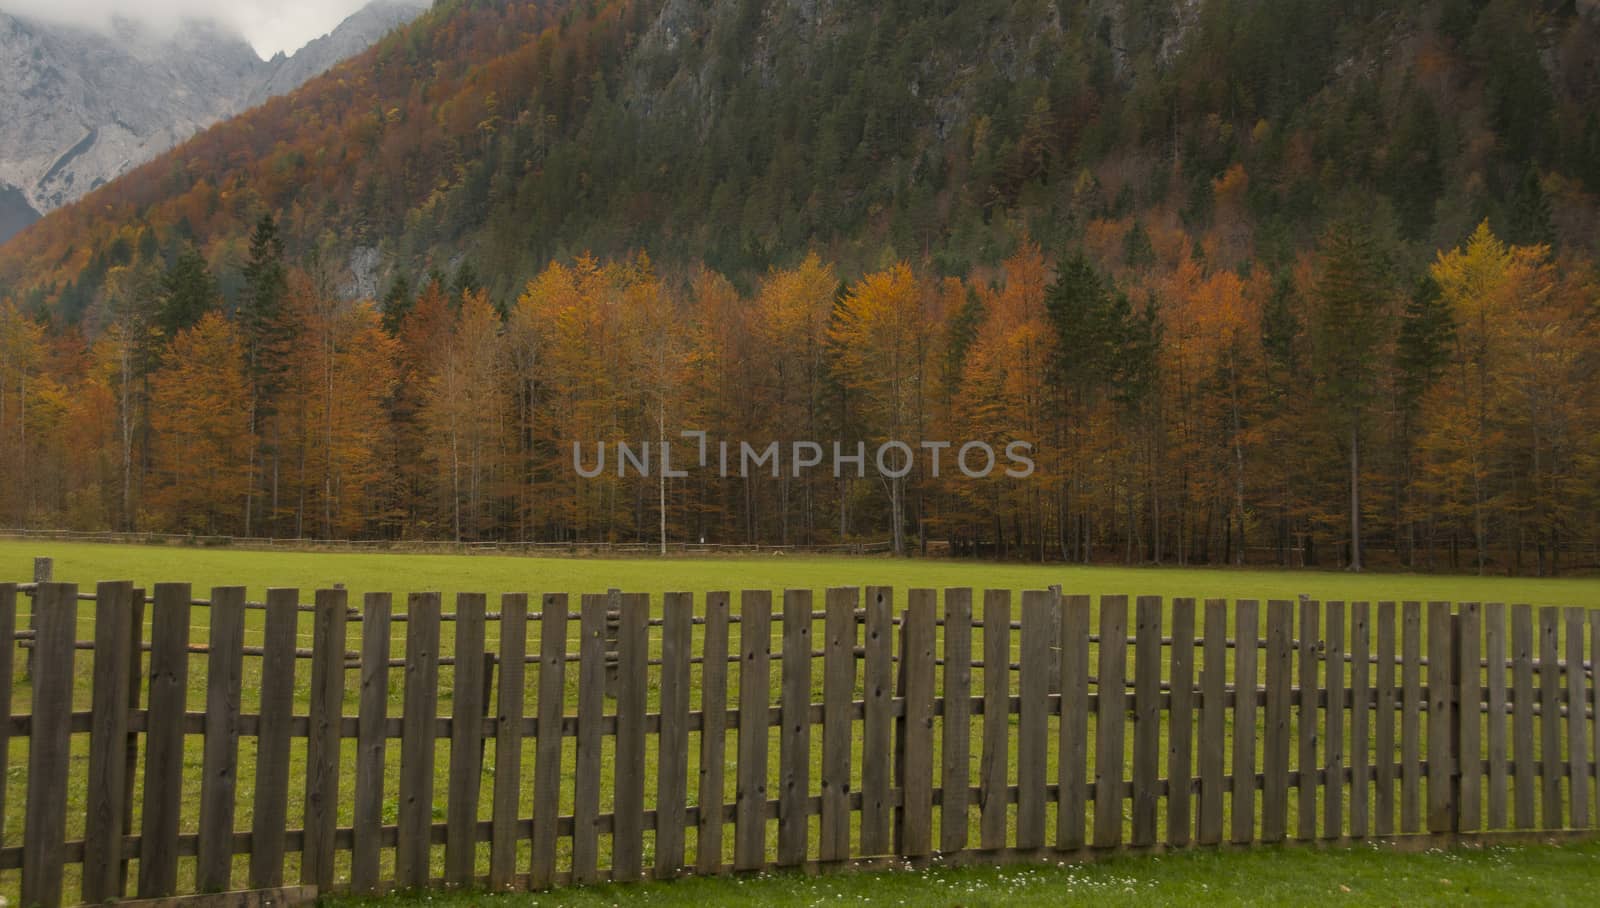 Autumn in Logarska dolina, Slovenia. Colorful red, orange and ye by asafaric